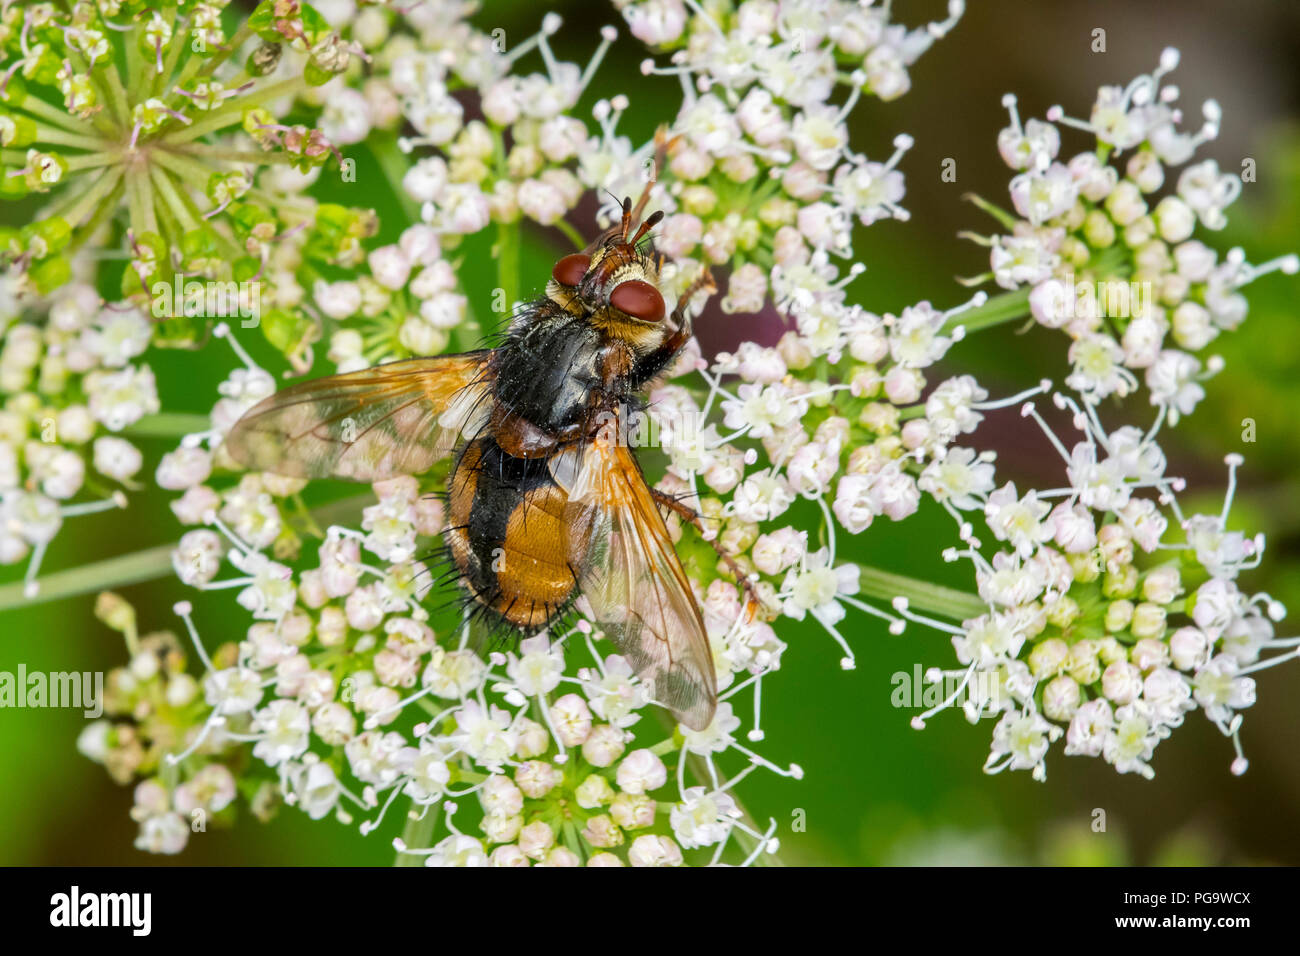 Parásito / Mosca tachinid / Mosca Tachina fera alimentándose de néctar de flor umbellifer en verano Foto de stock